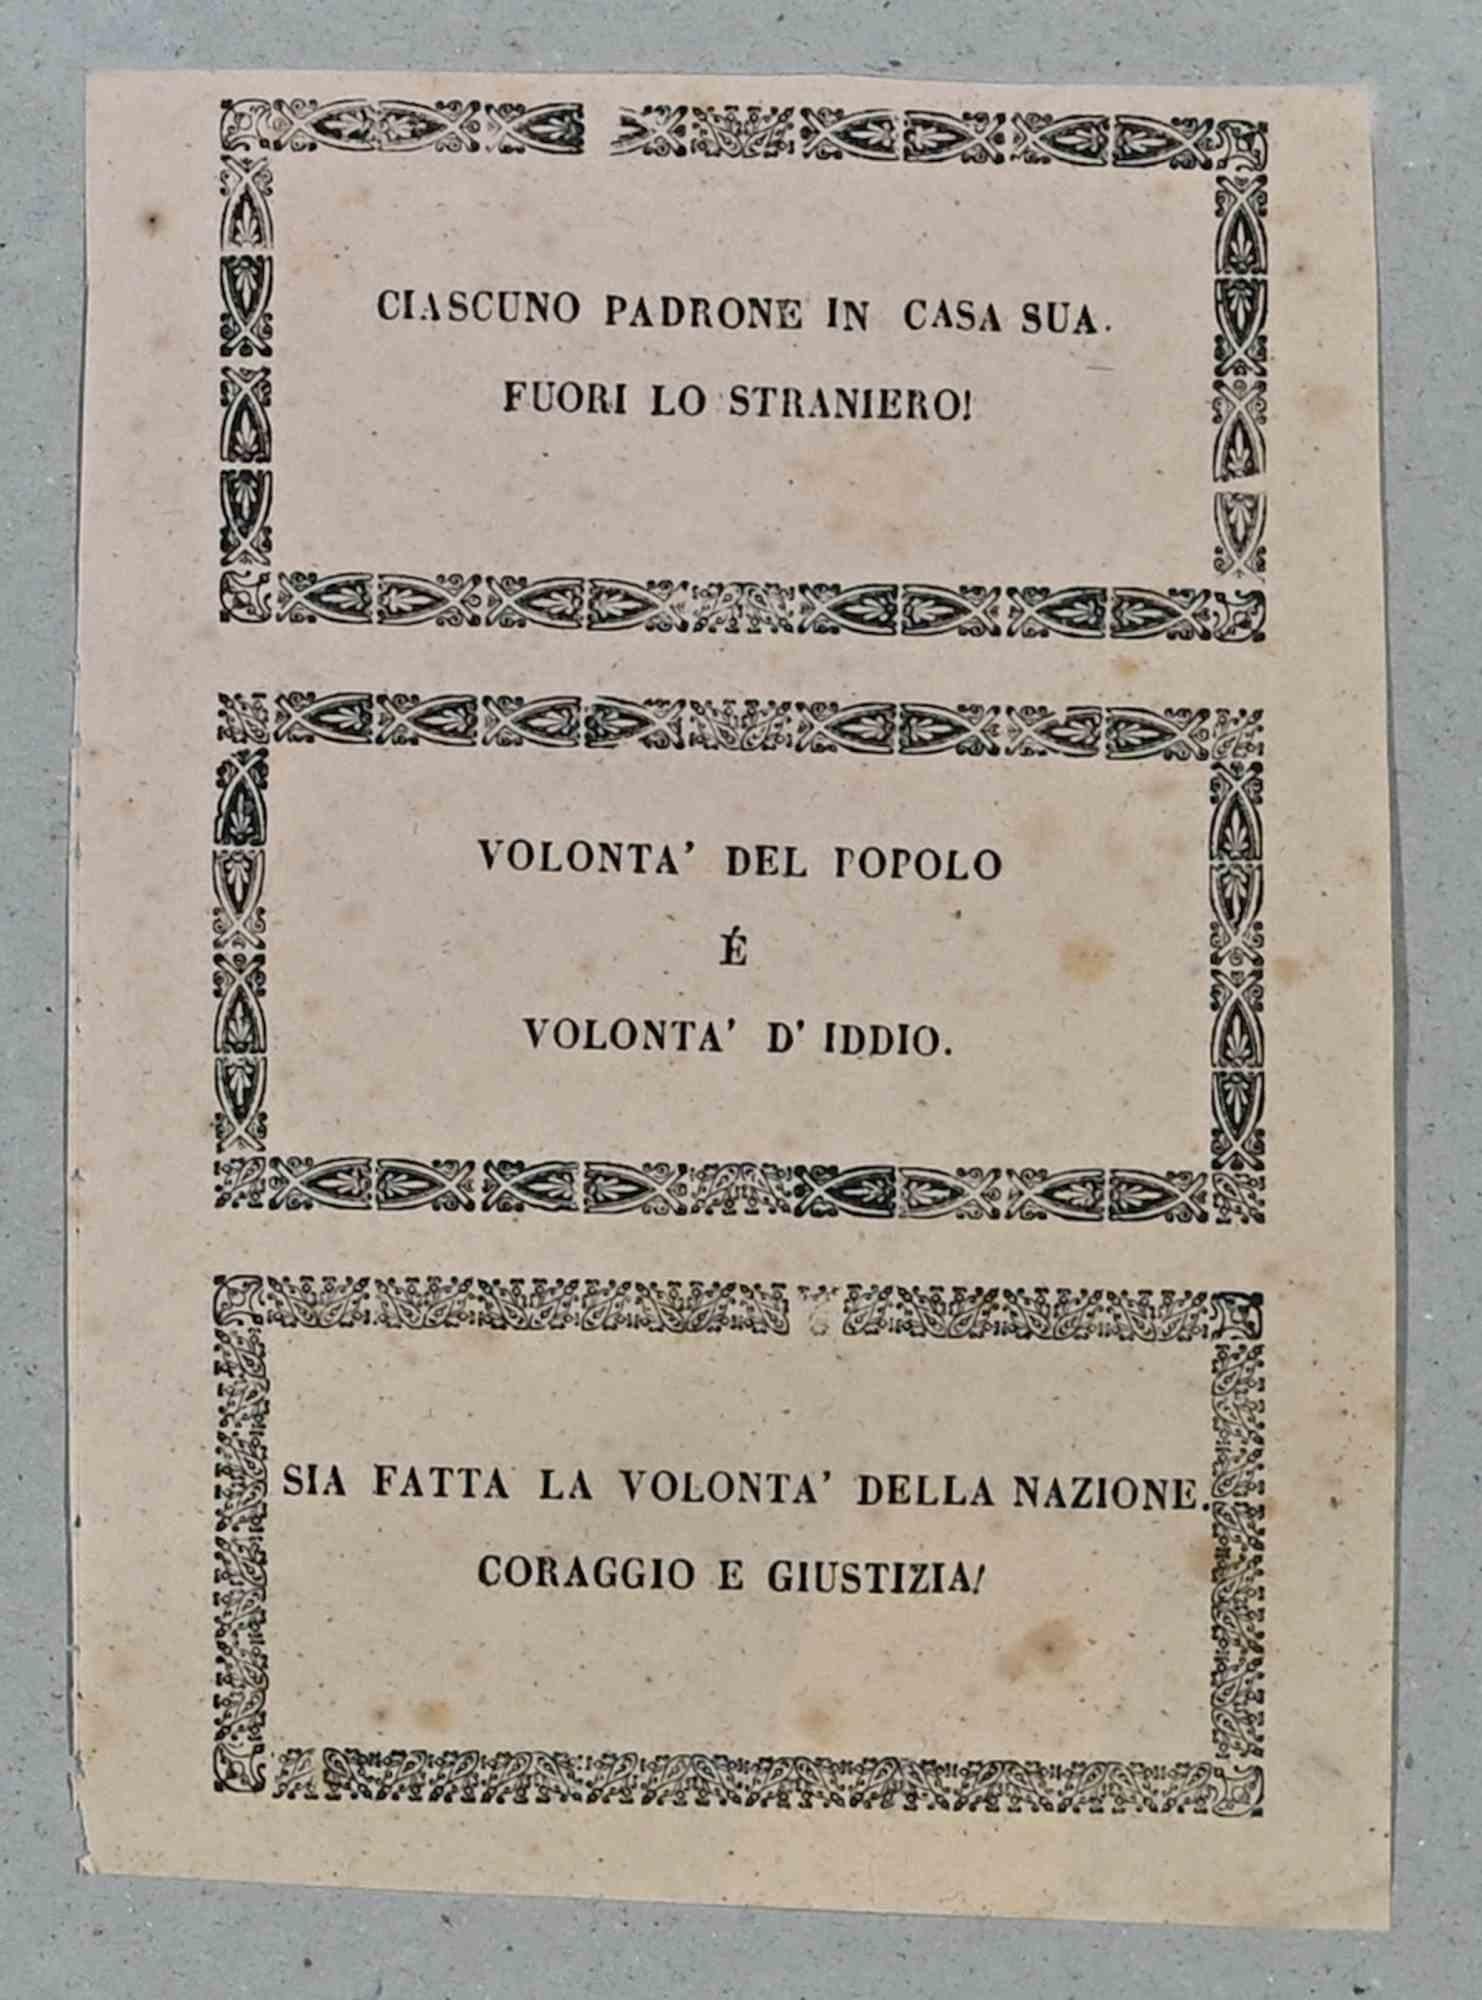 Ancient Flyer "mazziniano" - Document of Italian" Risorgimento" - 1860s - Art by Unknown